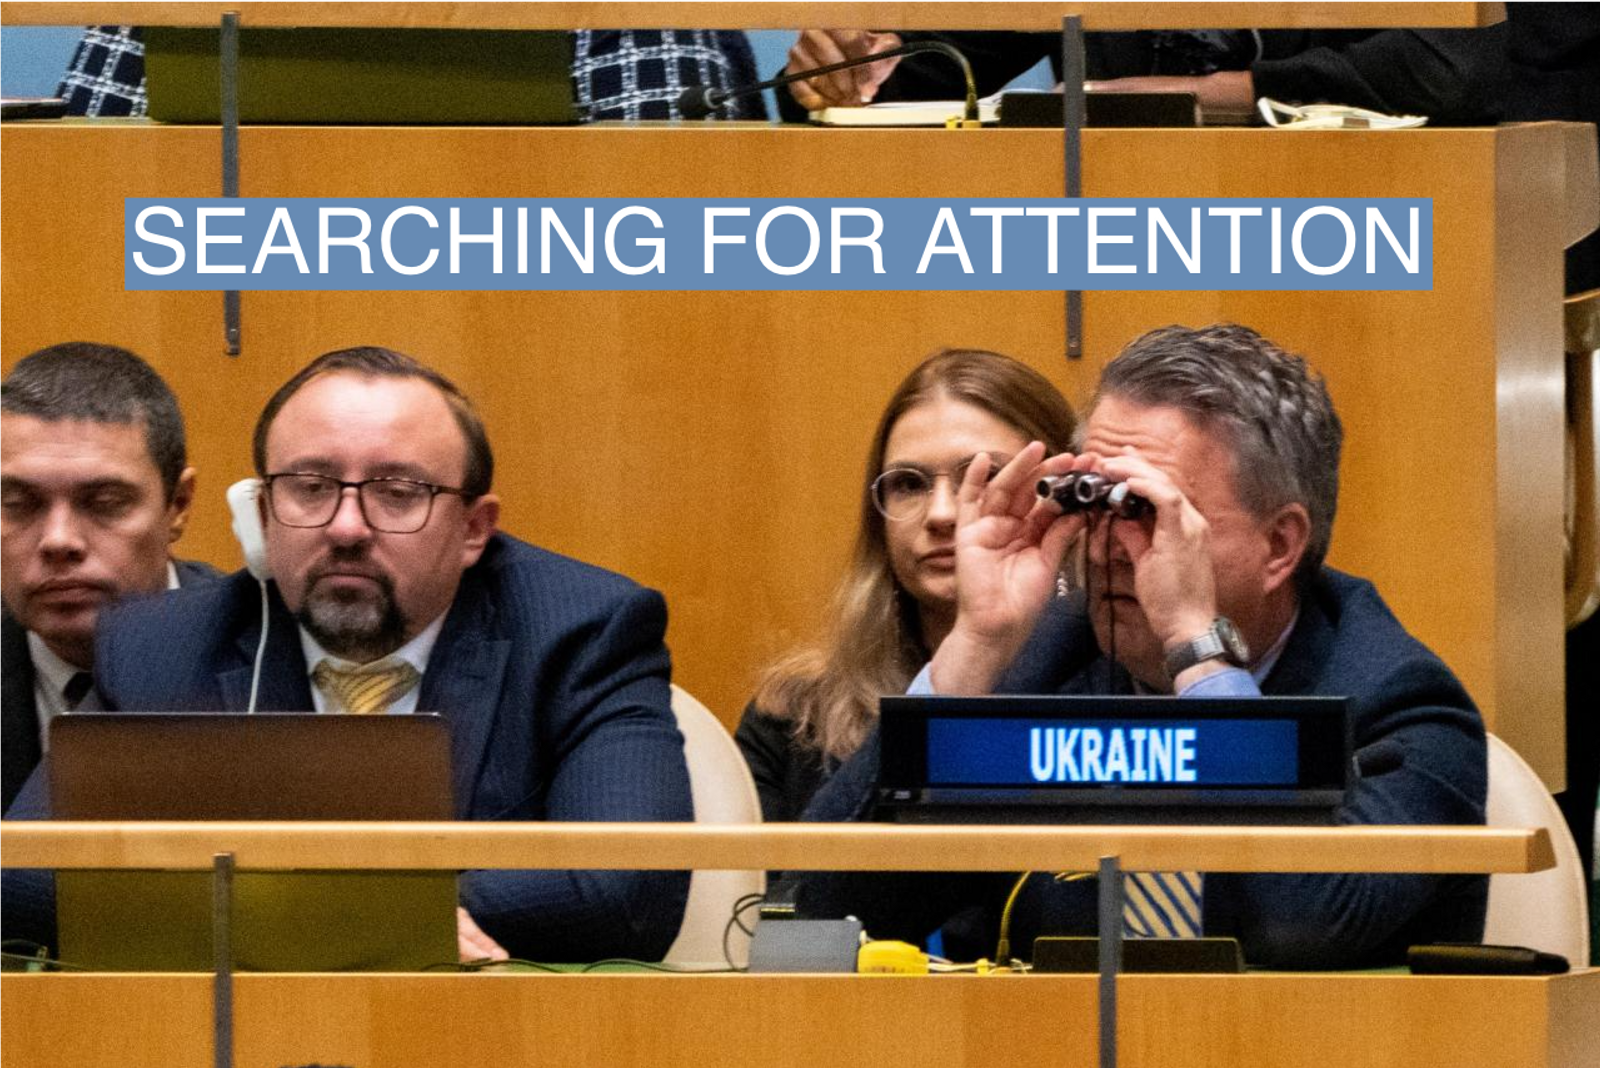 Ukrainian Ambassador to the U.N. Sergiy Kyslytsya scans the general assembly with binoculars